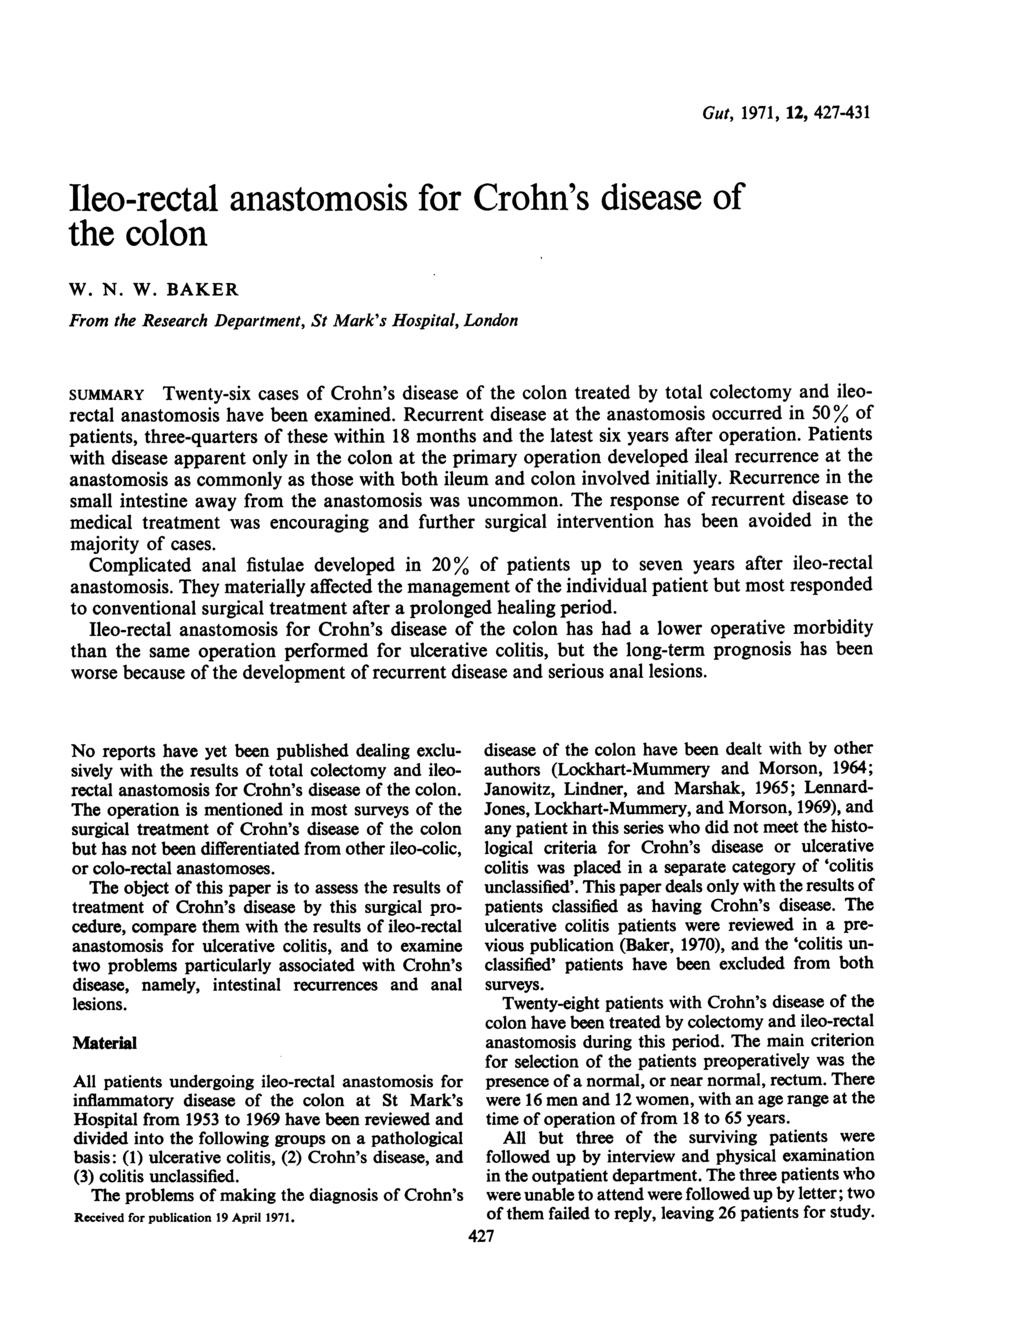 Ileo-rectal anastomosis for Crohn's disease of the colon W.